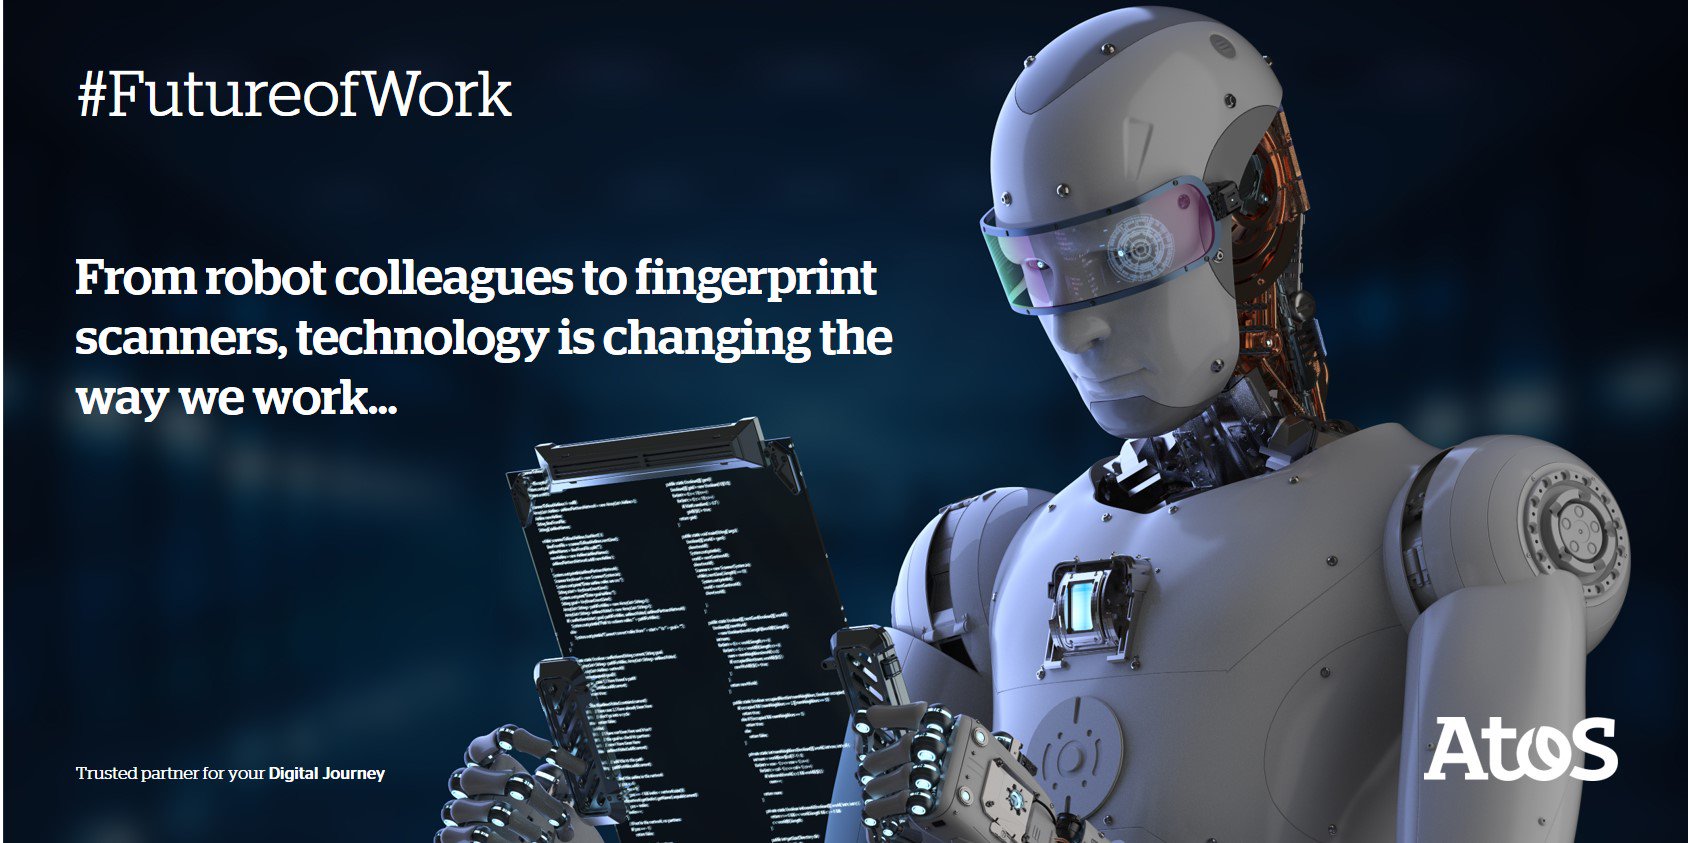 Atos on Twitter: "From robot colleagues to fingerprint scanners,  @MarianneHewlett explores the #FutureofWork #infographic  https://t.co/7ZAUFrKKxJ https://t.co/gsz5vClkhc" / Twitter